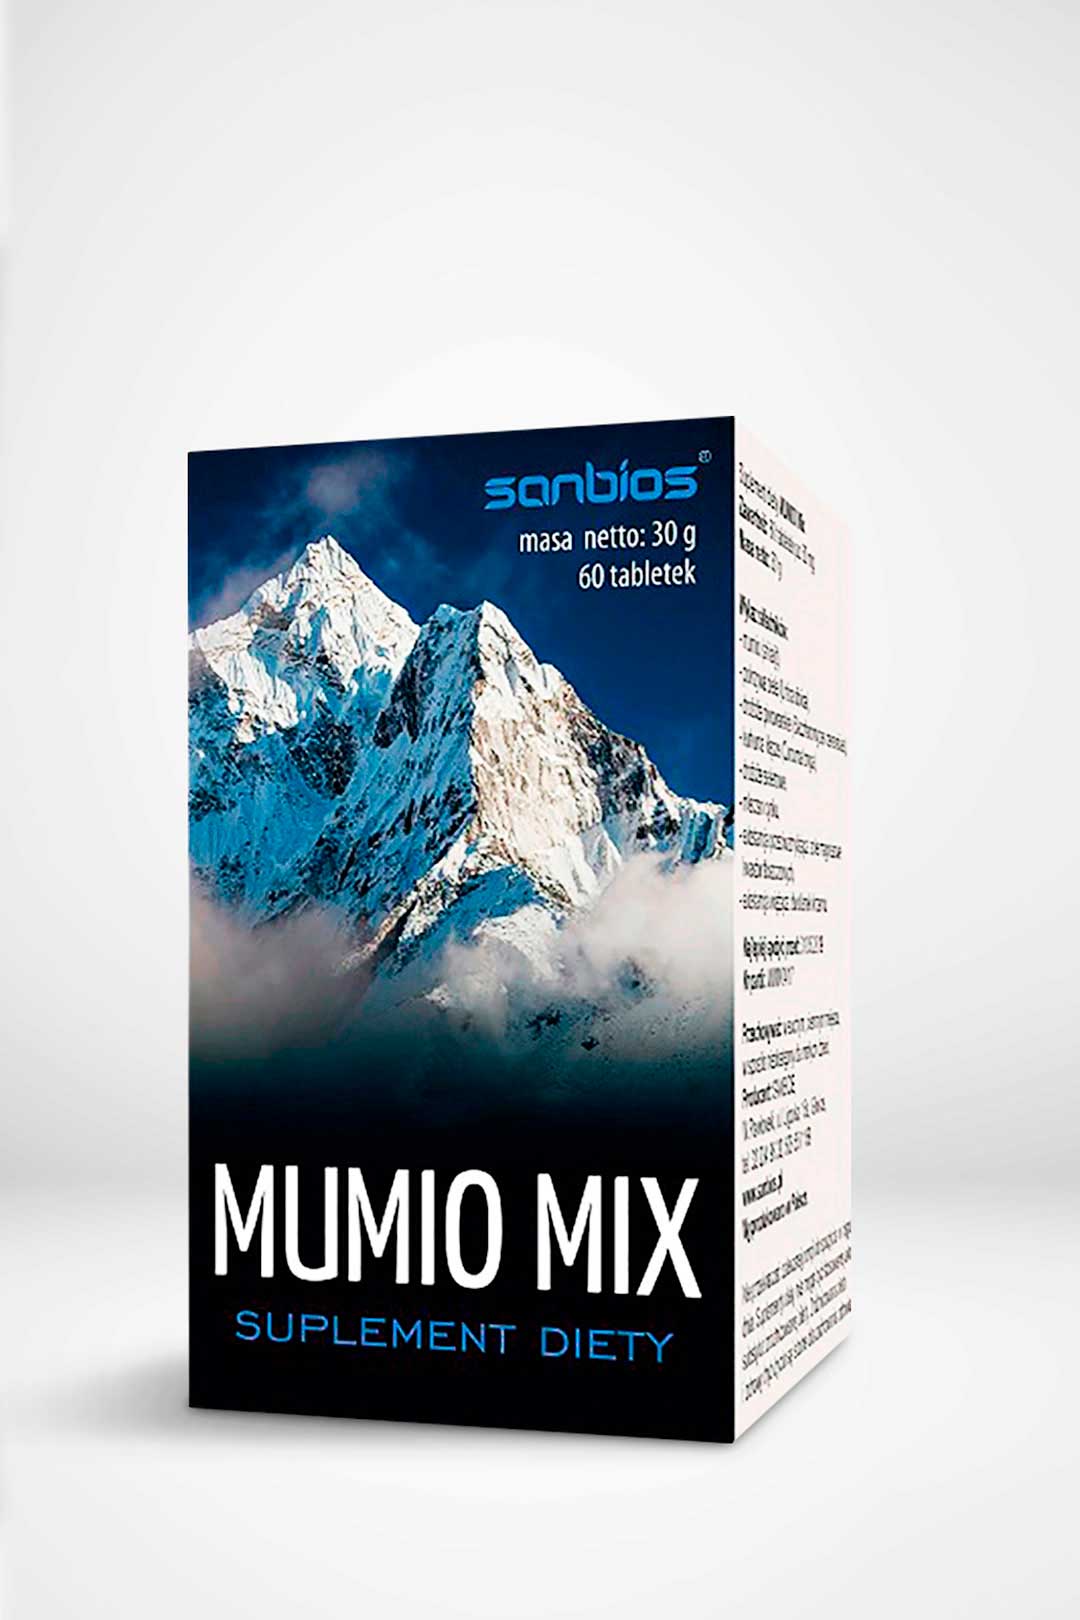 Sanbios Mumio mix